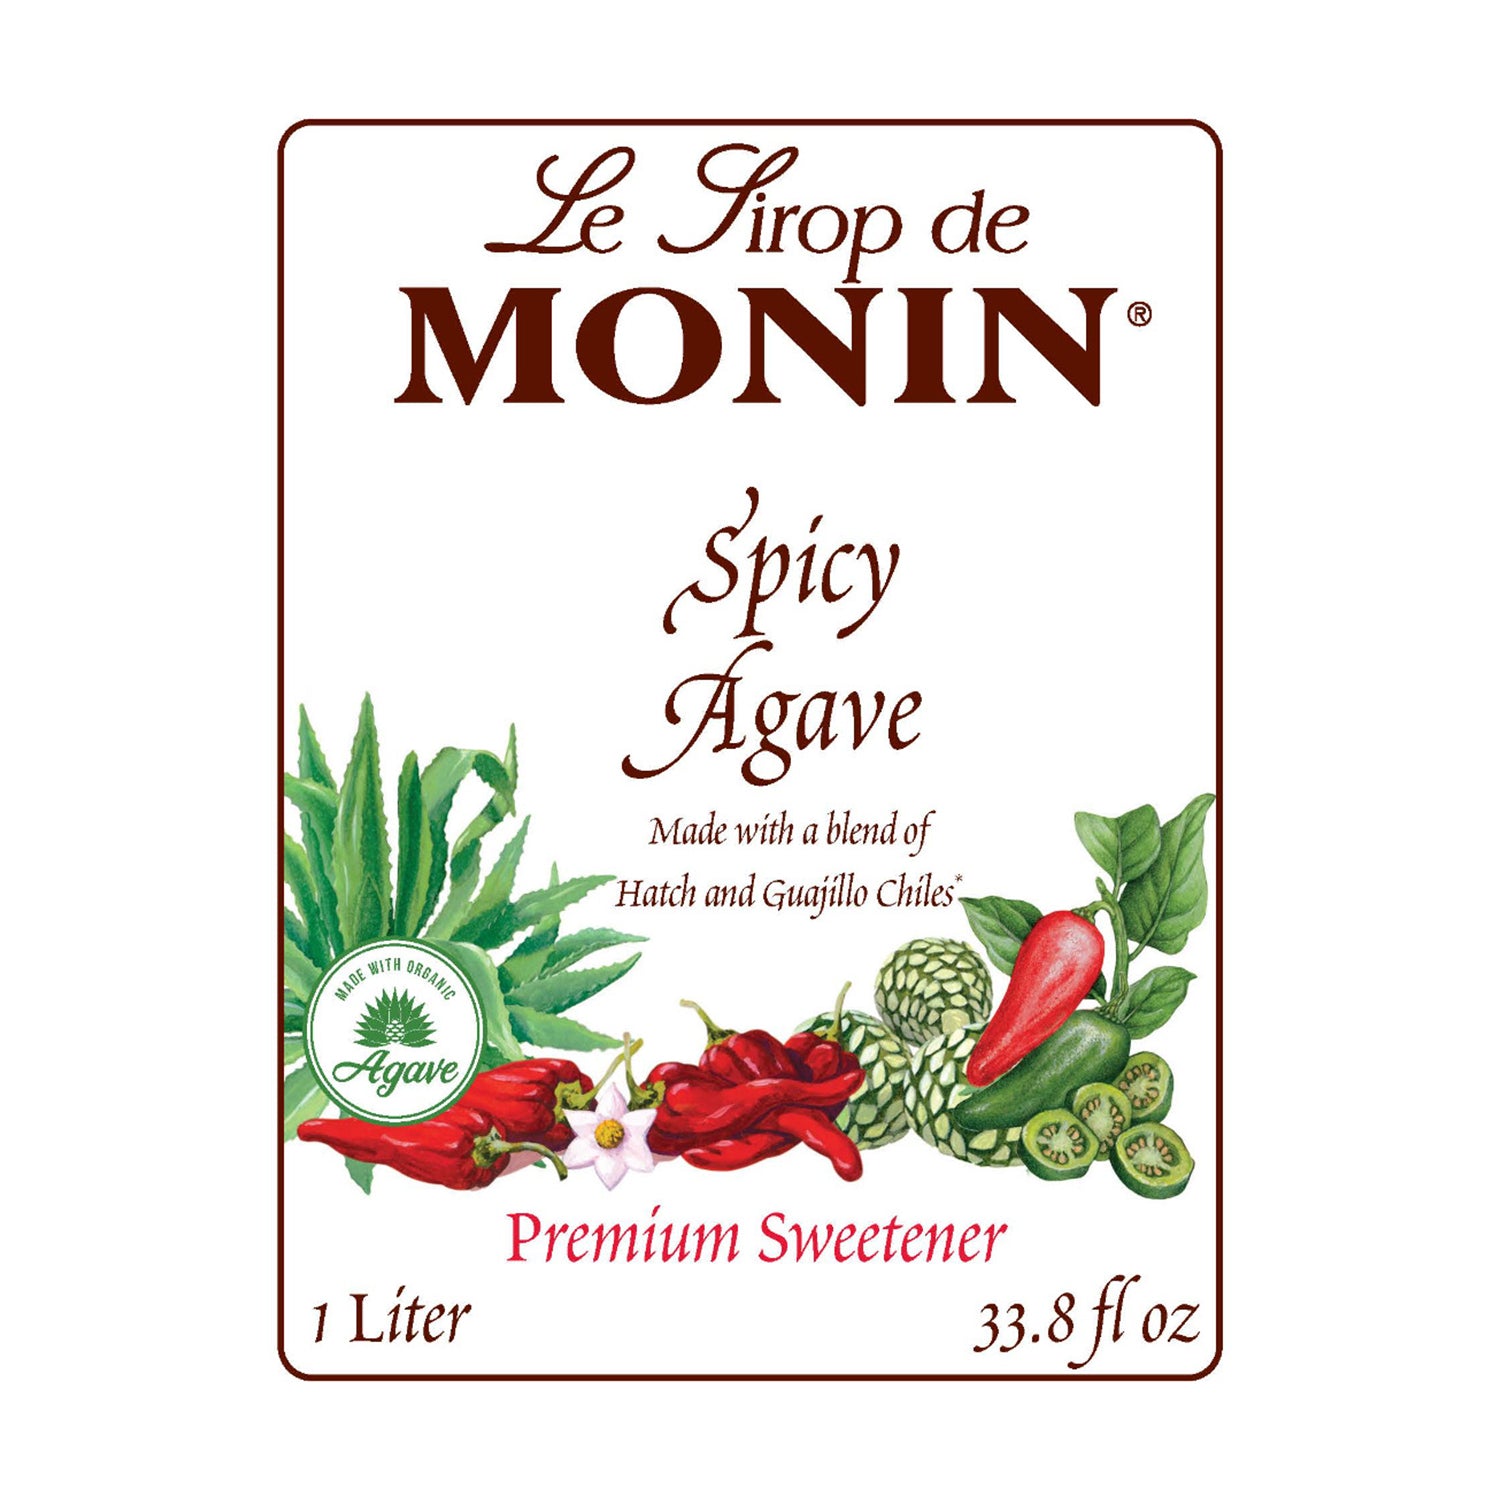 Monin Spicy Agave Sweetener brand label